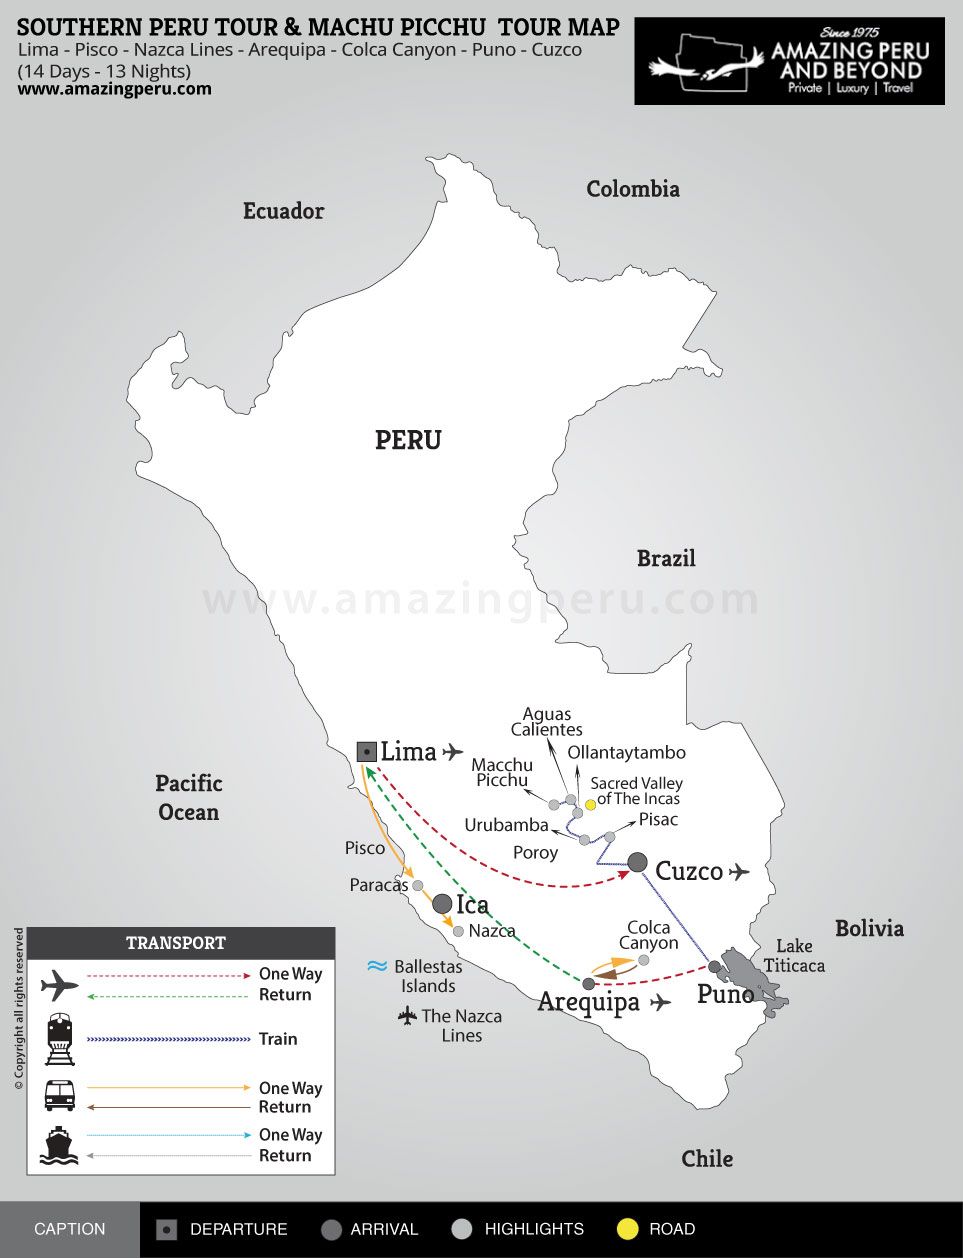 Southern Peru tour & Machu Picchu Tour - 16 days / 15 nights.